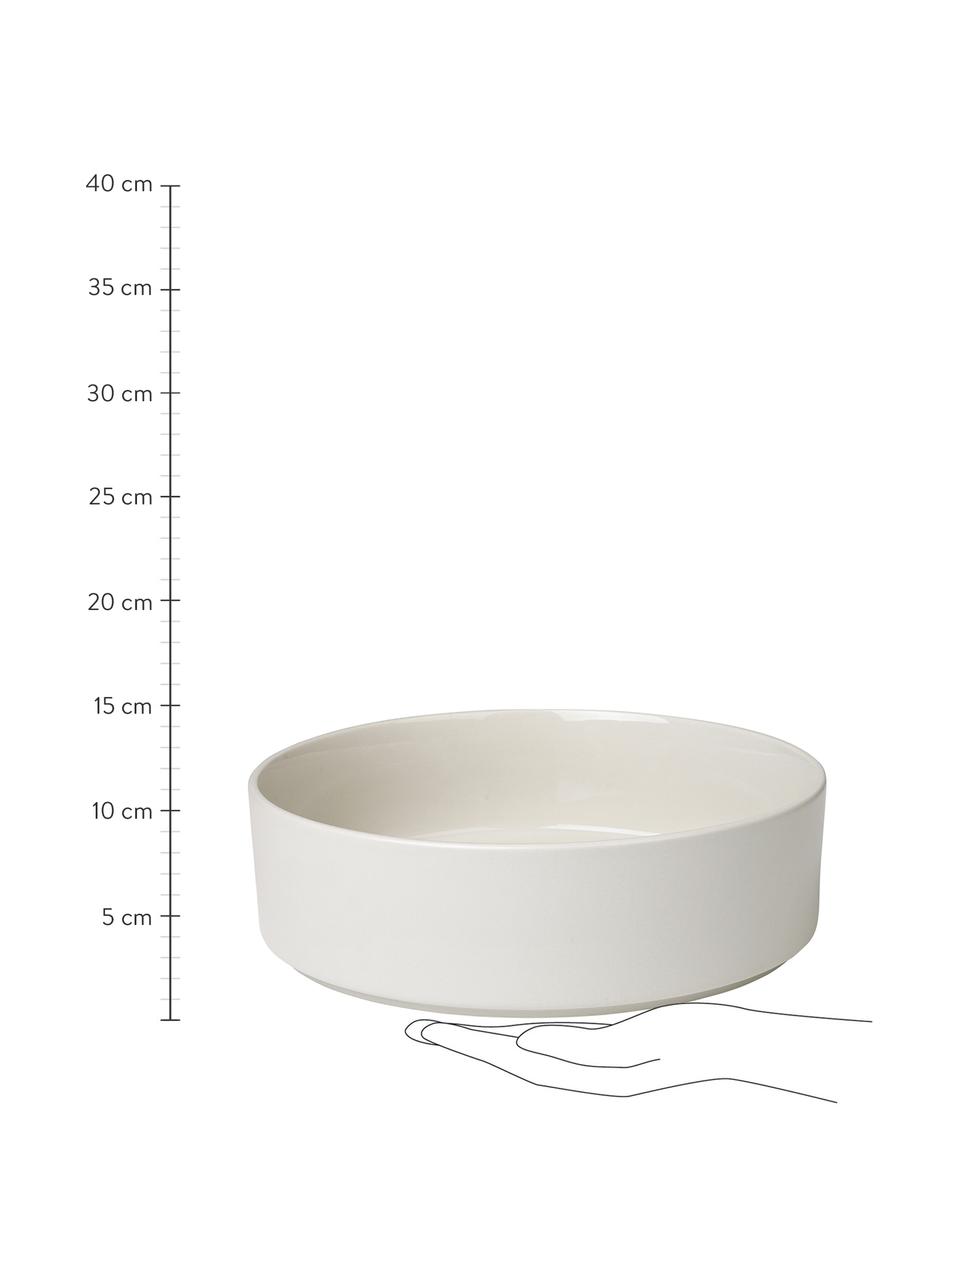 Servírovací mísa Pilar, Ø 27 cm, Keramika, Krémově bílá, Ø 27 cm